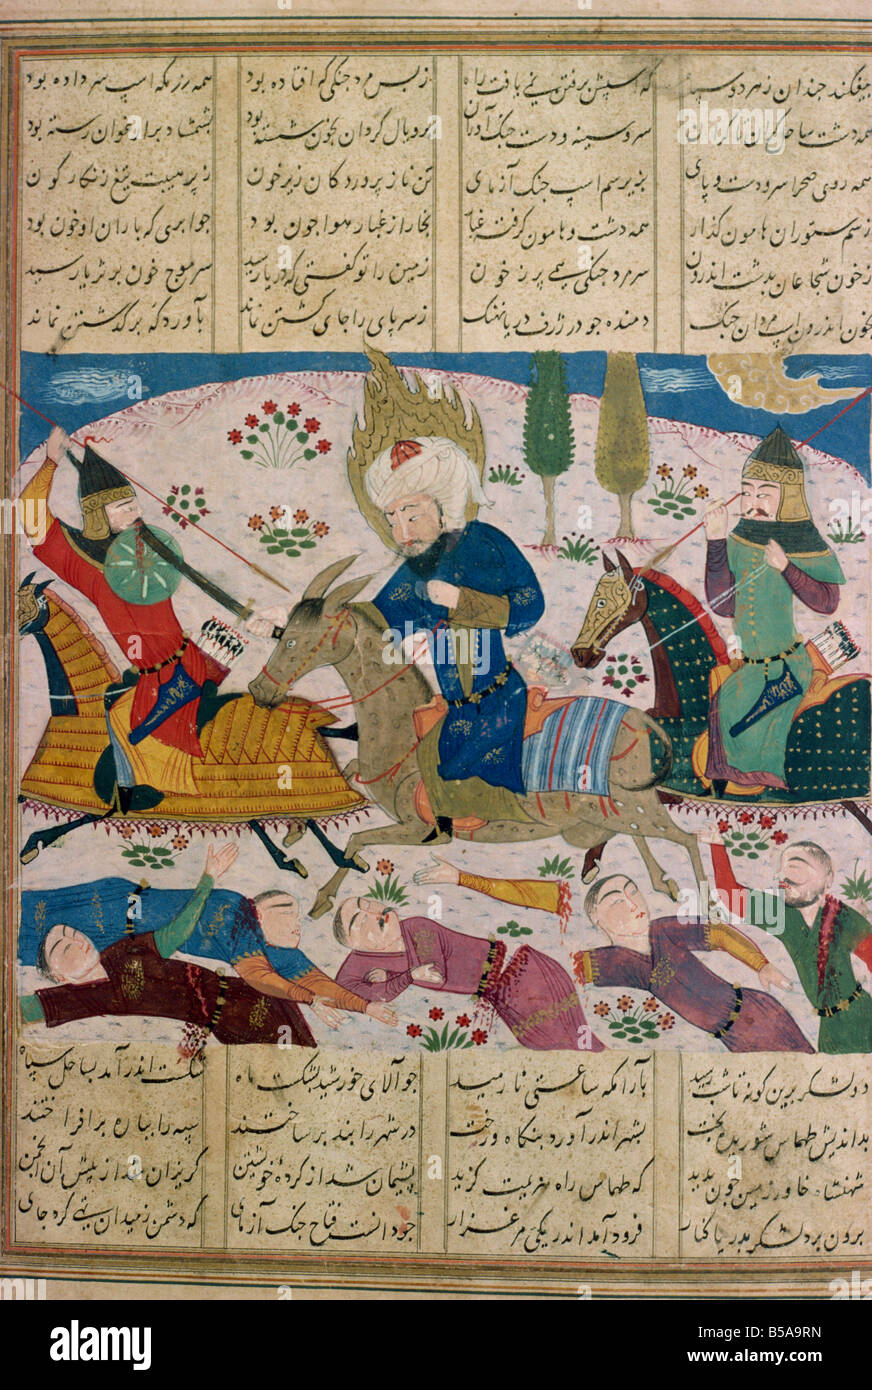 Manuscript Khawian Homo Decorative Arts Museum Teheran Iran Middle East Stock Photo